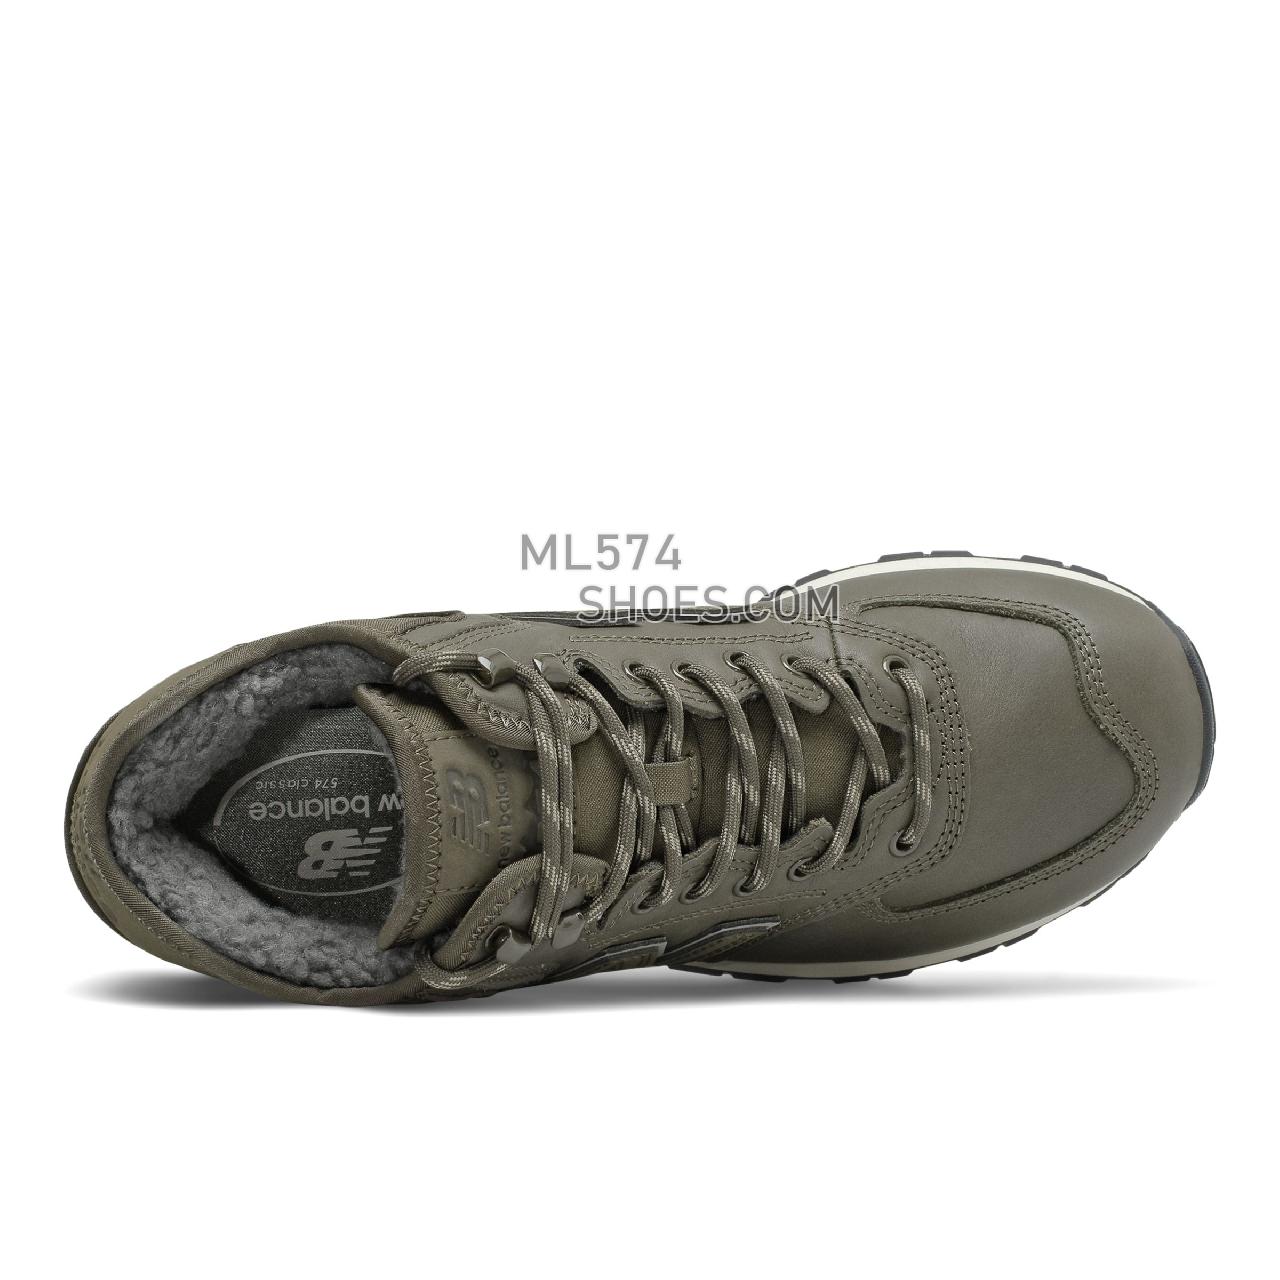 New Balance MH574V1 - Men's Classic Sneakers - Black Olive with Moonbeam - MH574BG1